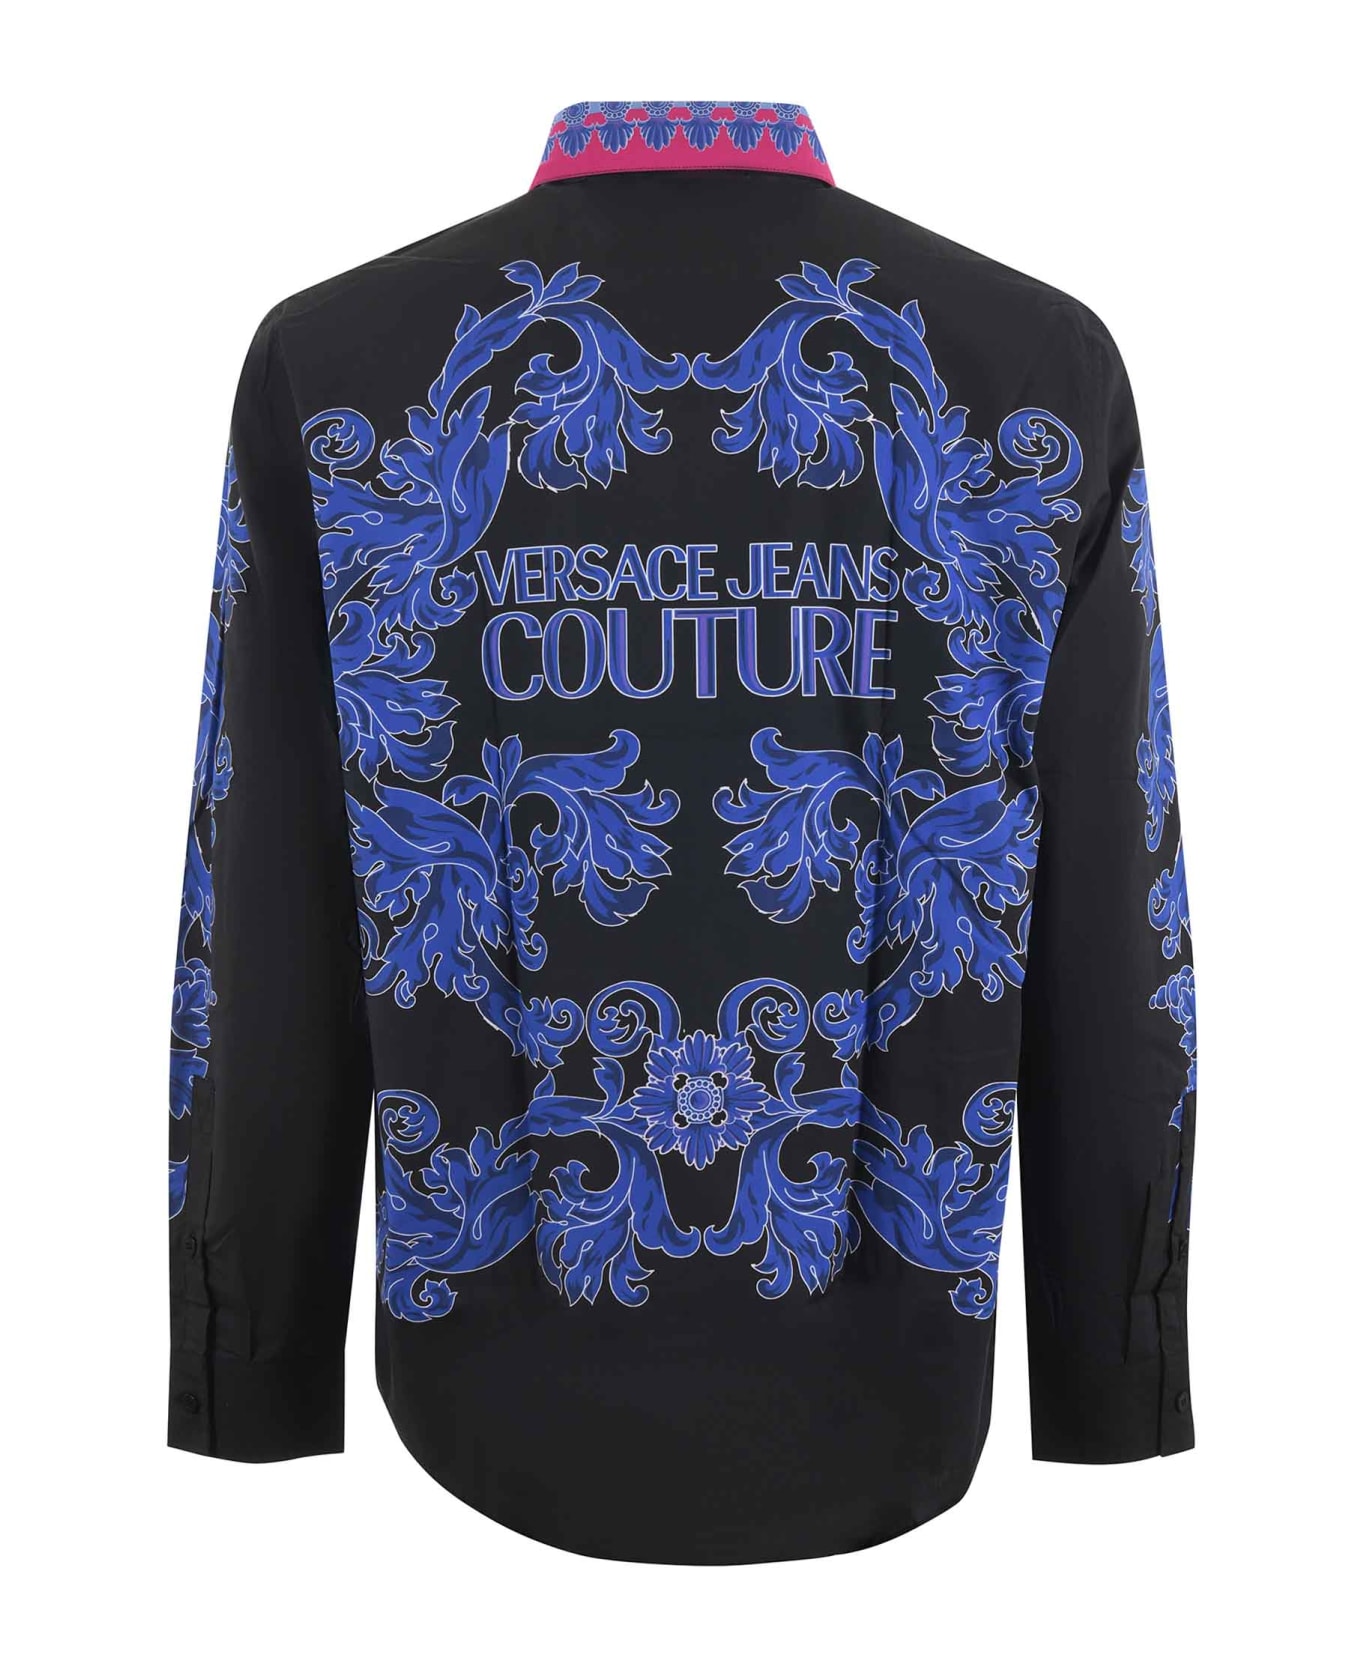 Versace Jeans Couture Shirt - Nero/multicolor